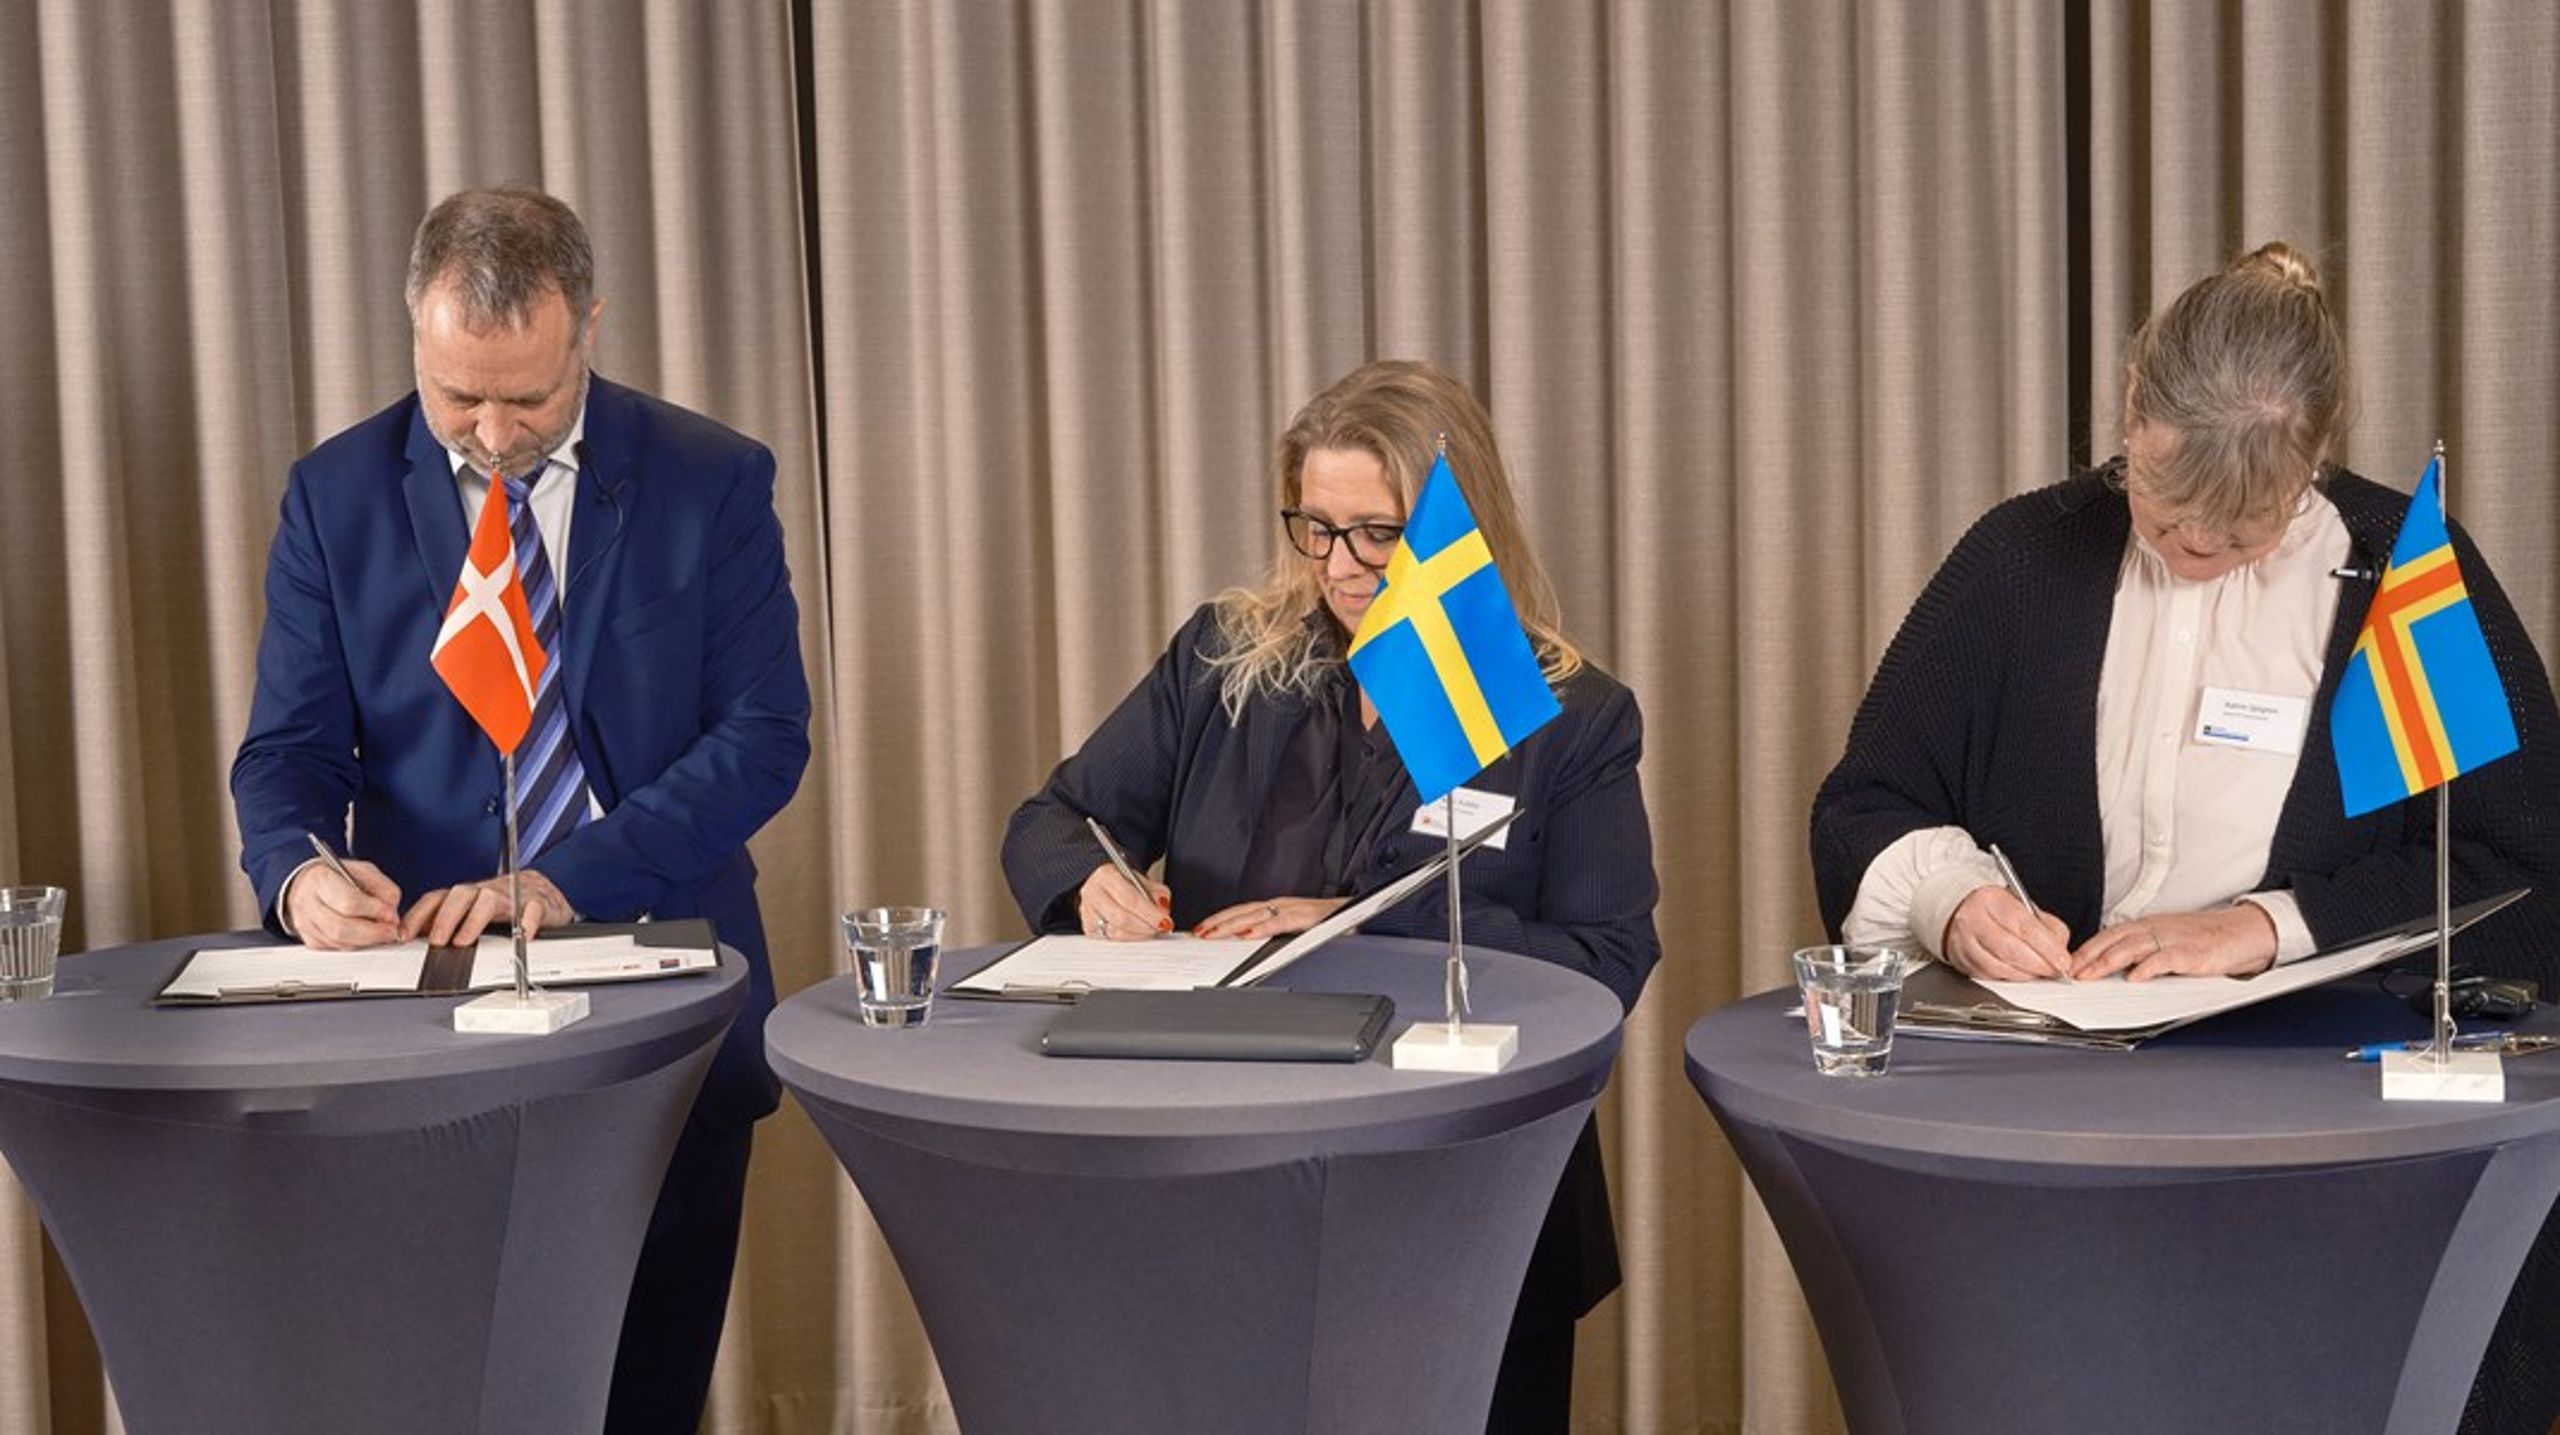 Bornholms borgmester, Jacob Trøst (K), underskriver sammen med&nbsp;Katrin Sjögren, premierminister&nbsp;på Åland og Gotlands borgmester, Meit Fohlin, hensigtserklæringen.&nbsp;